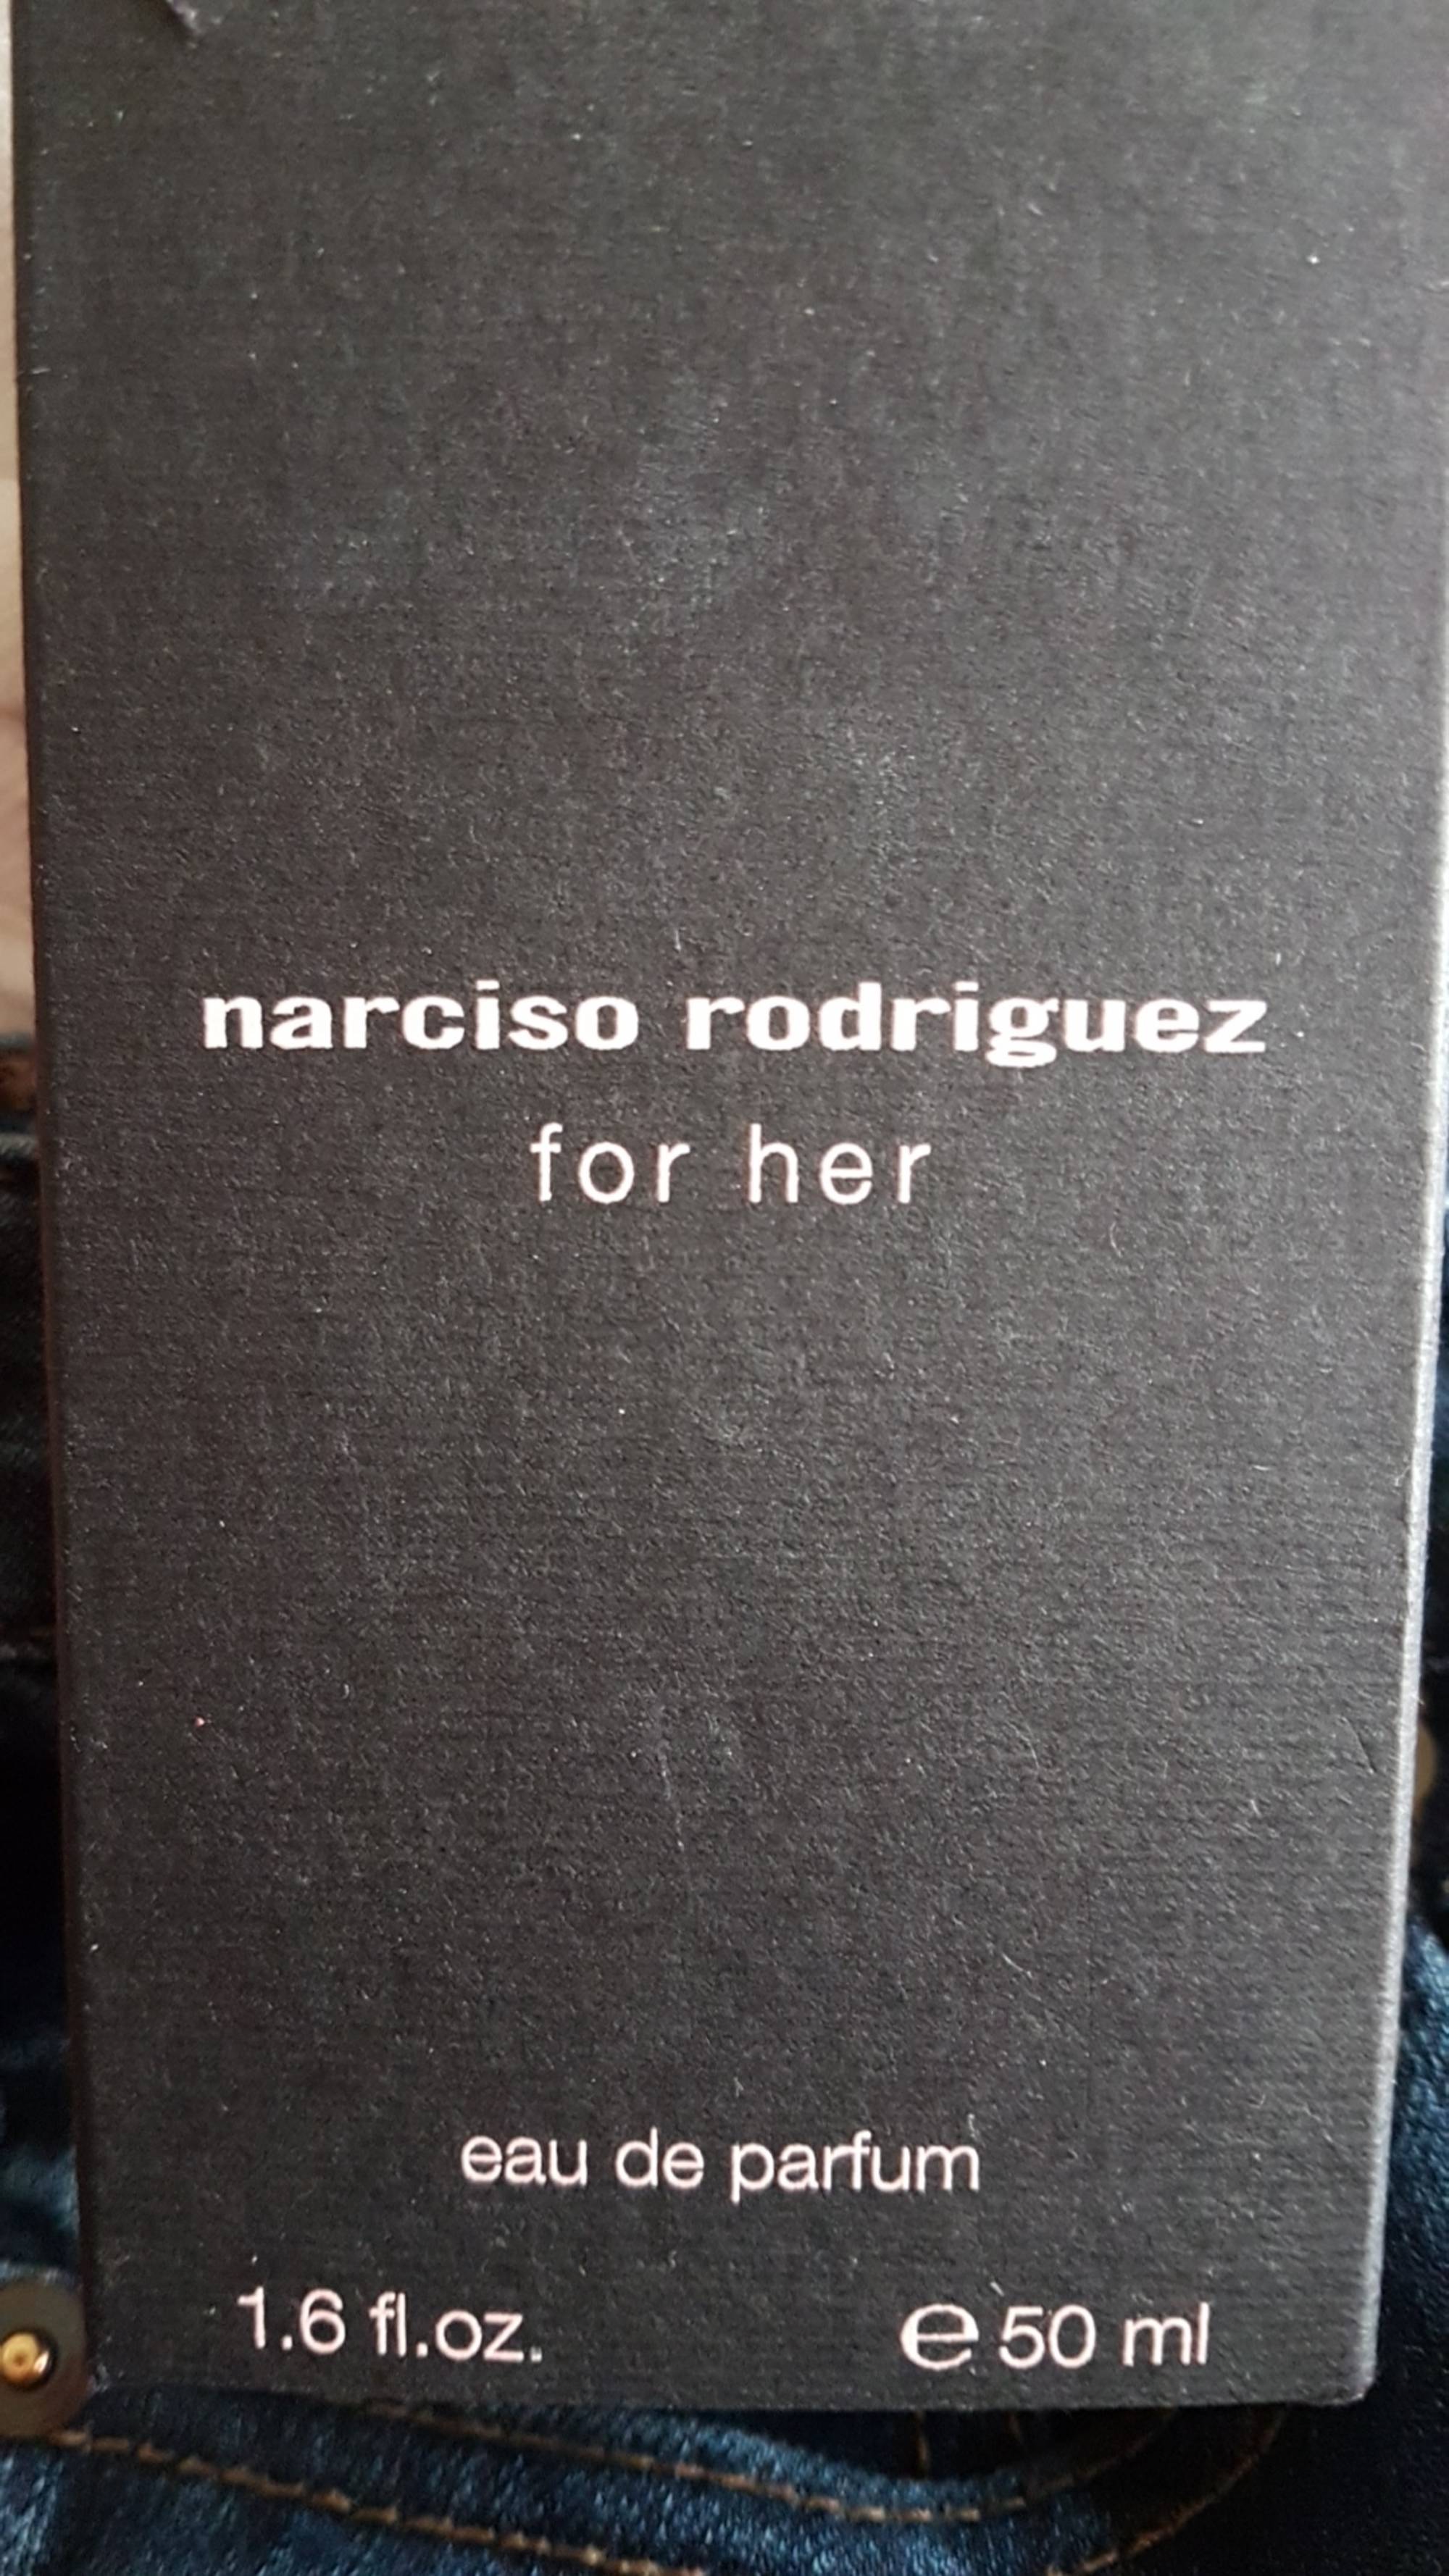 NARCISO RODRIGUEZ - Narciso Rodriguez for her - Eau de parfum